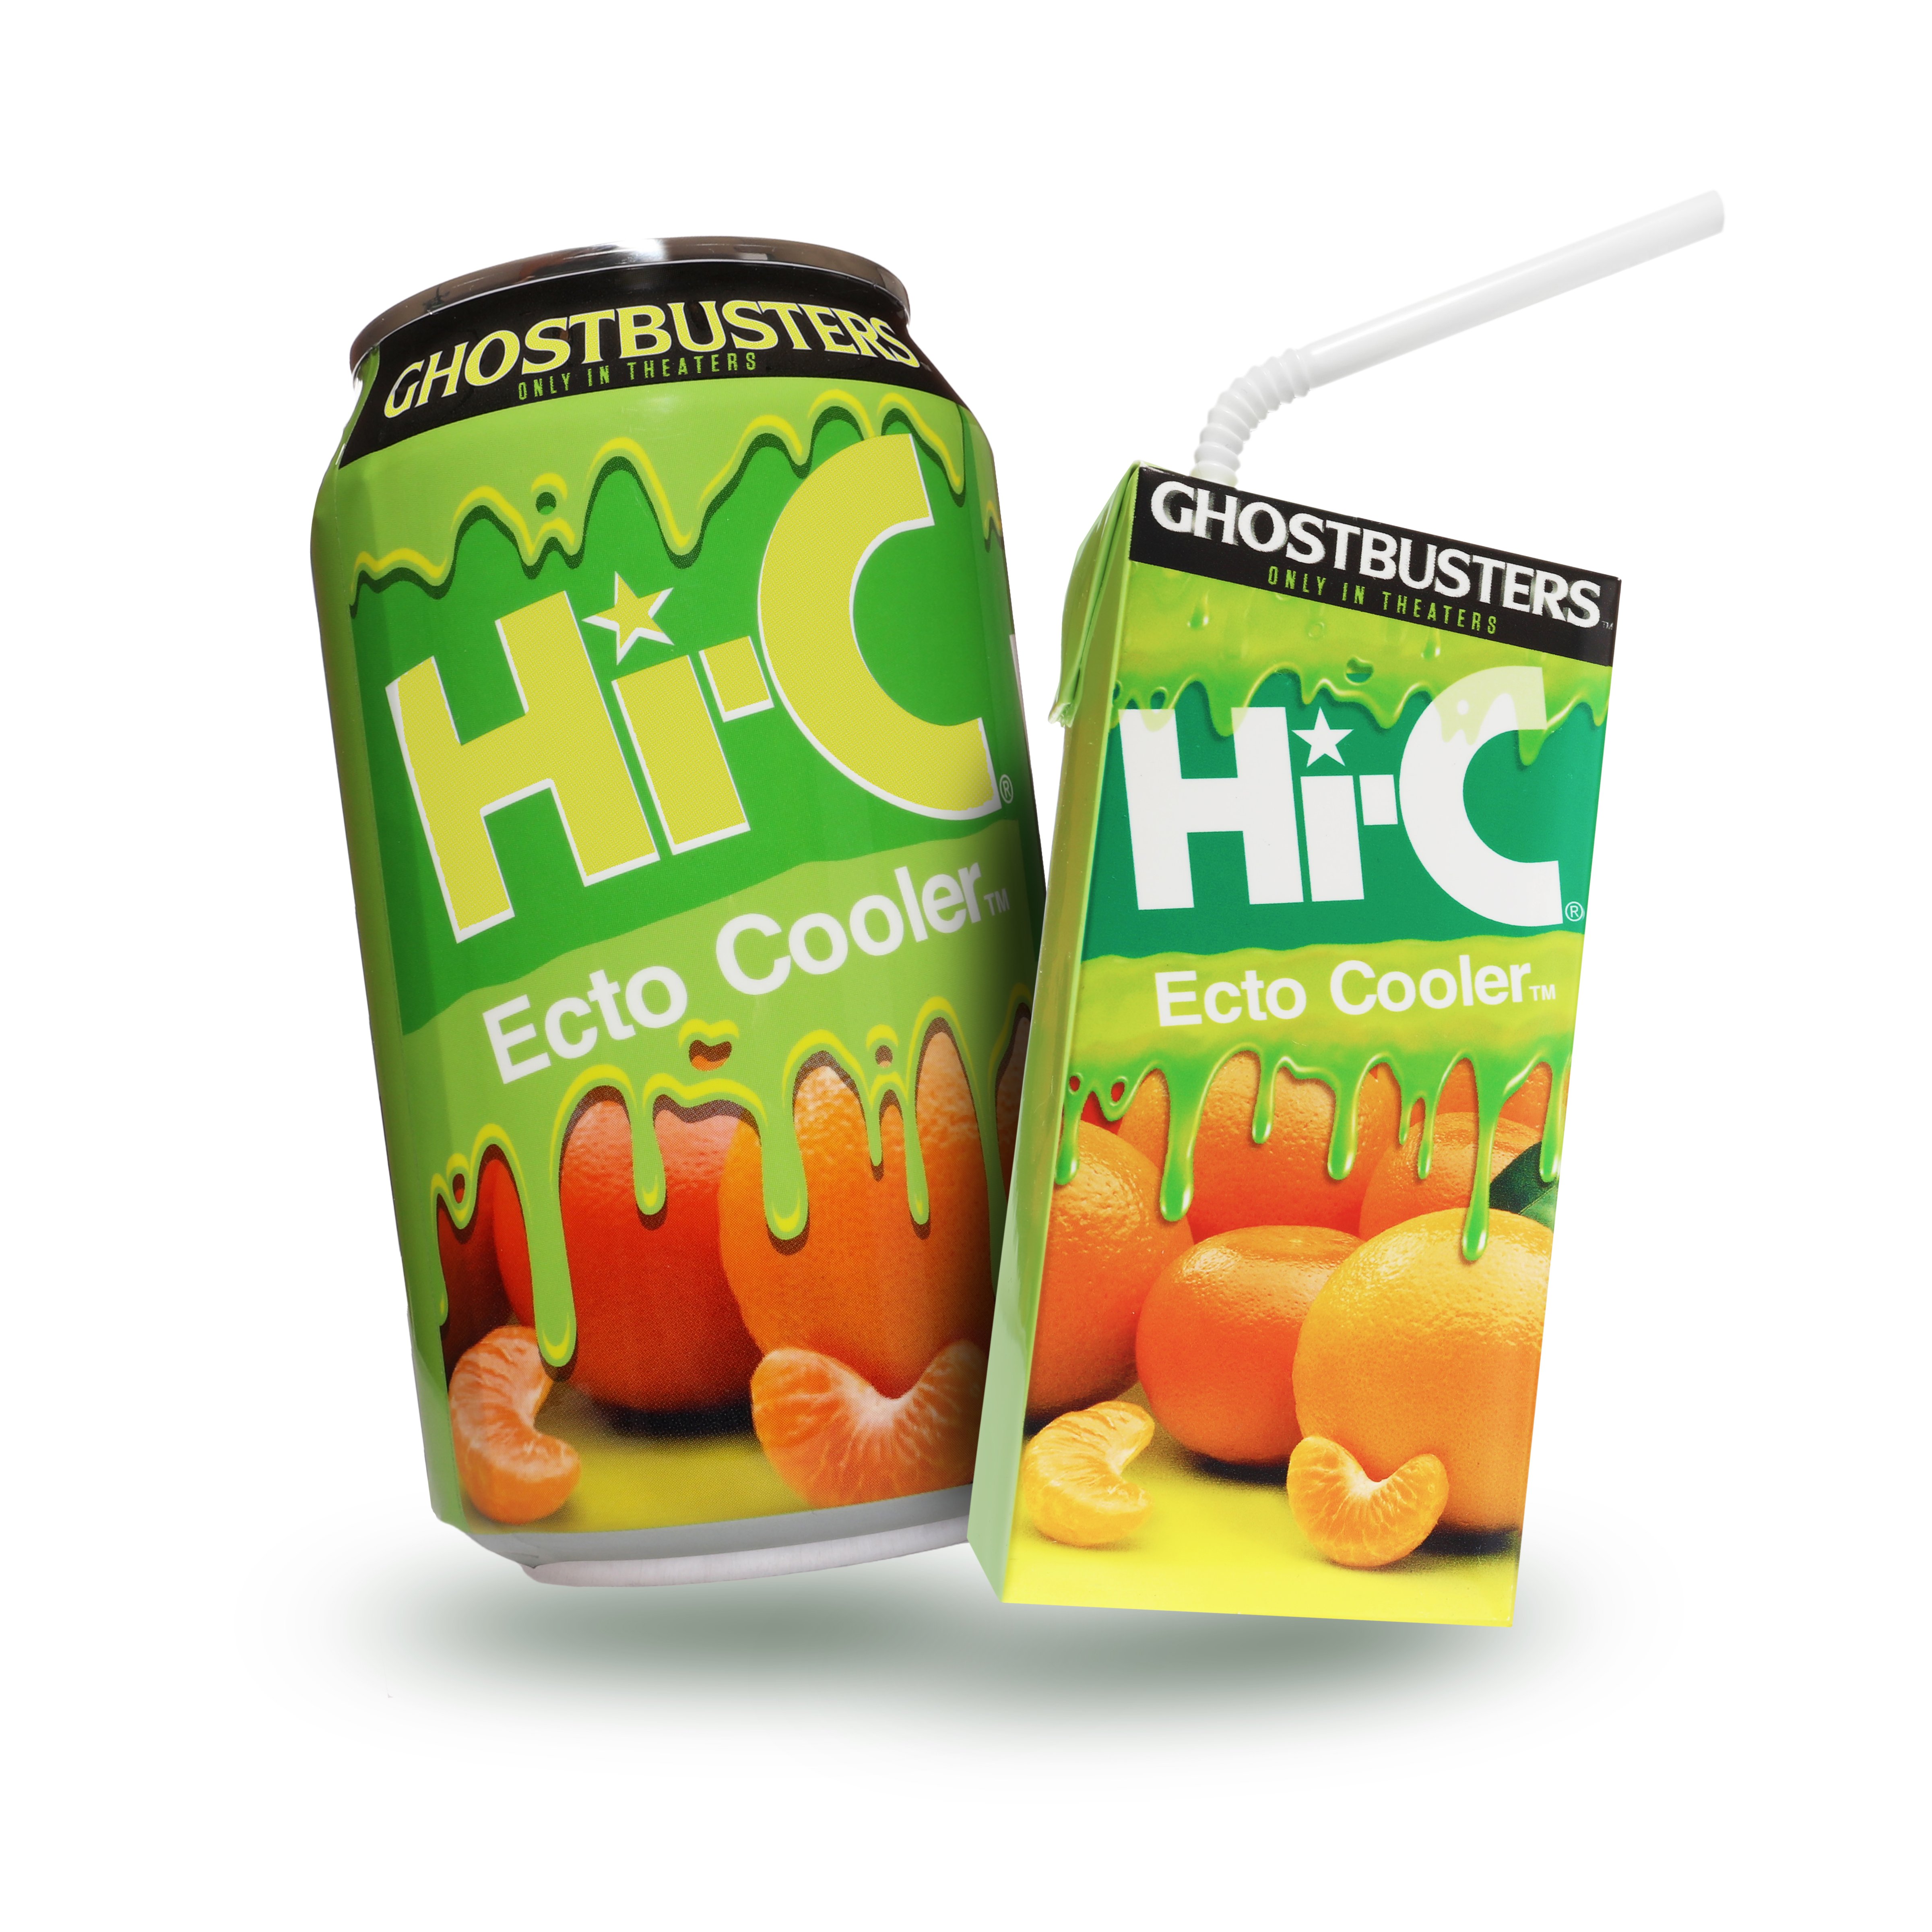 hi-ecto-cooler-ghostbusters-coca-cola